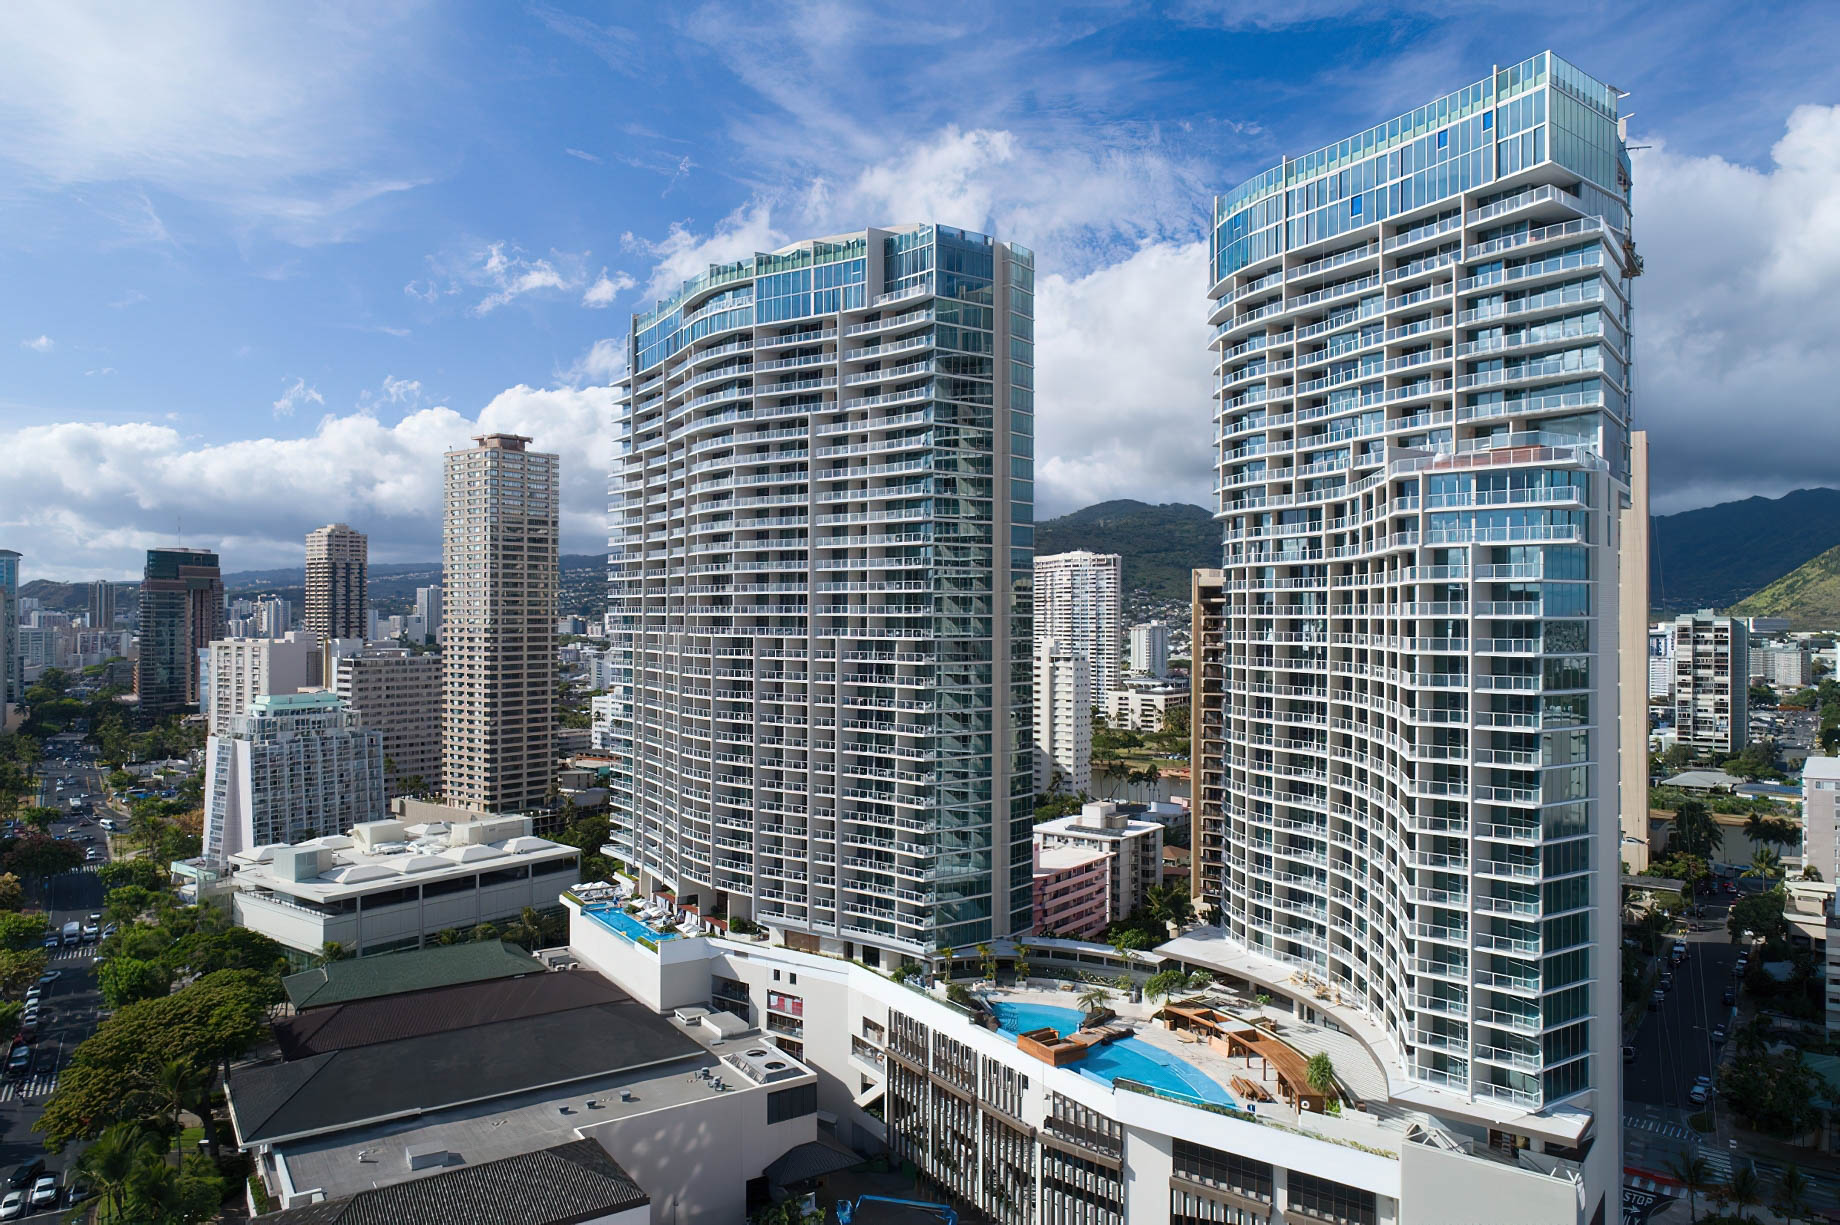 The Ritz-Carlton Residences, Waikiki Beach Hotel - Waikiki, HI, USA - Hotel Exterior View